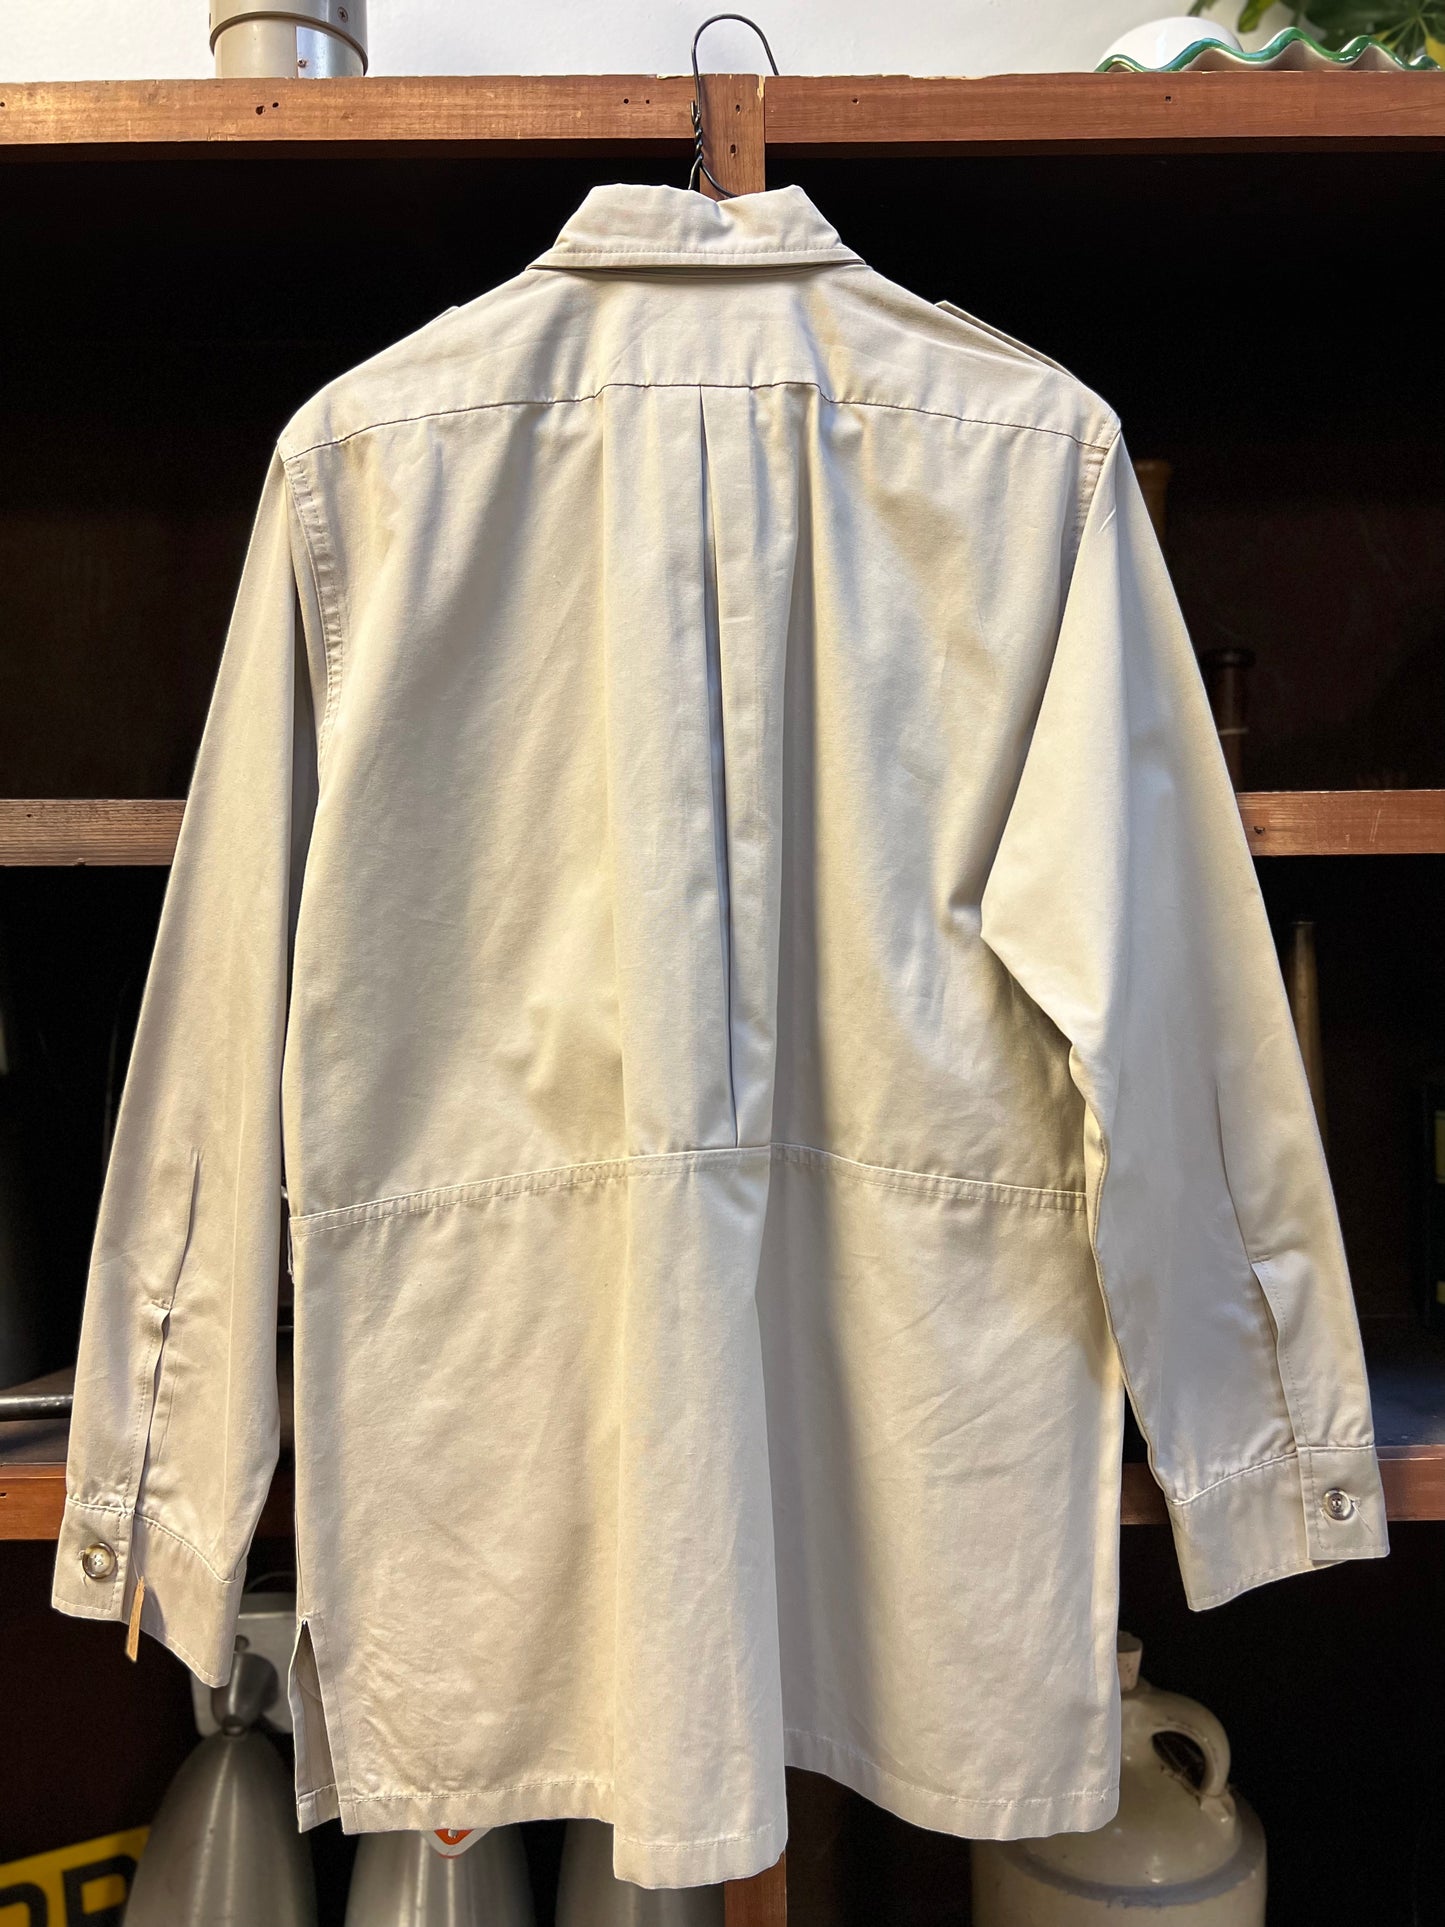 C.C. Filson Co. Khaki Long Sleeve Safari Shirt sz 44 USA Made